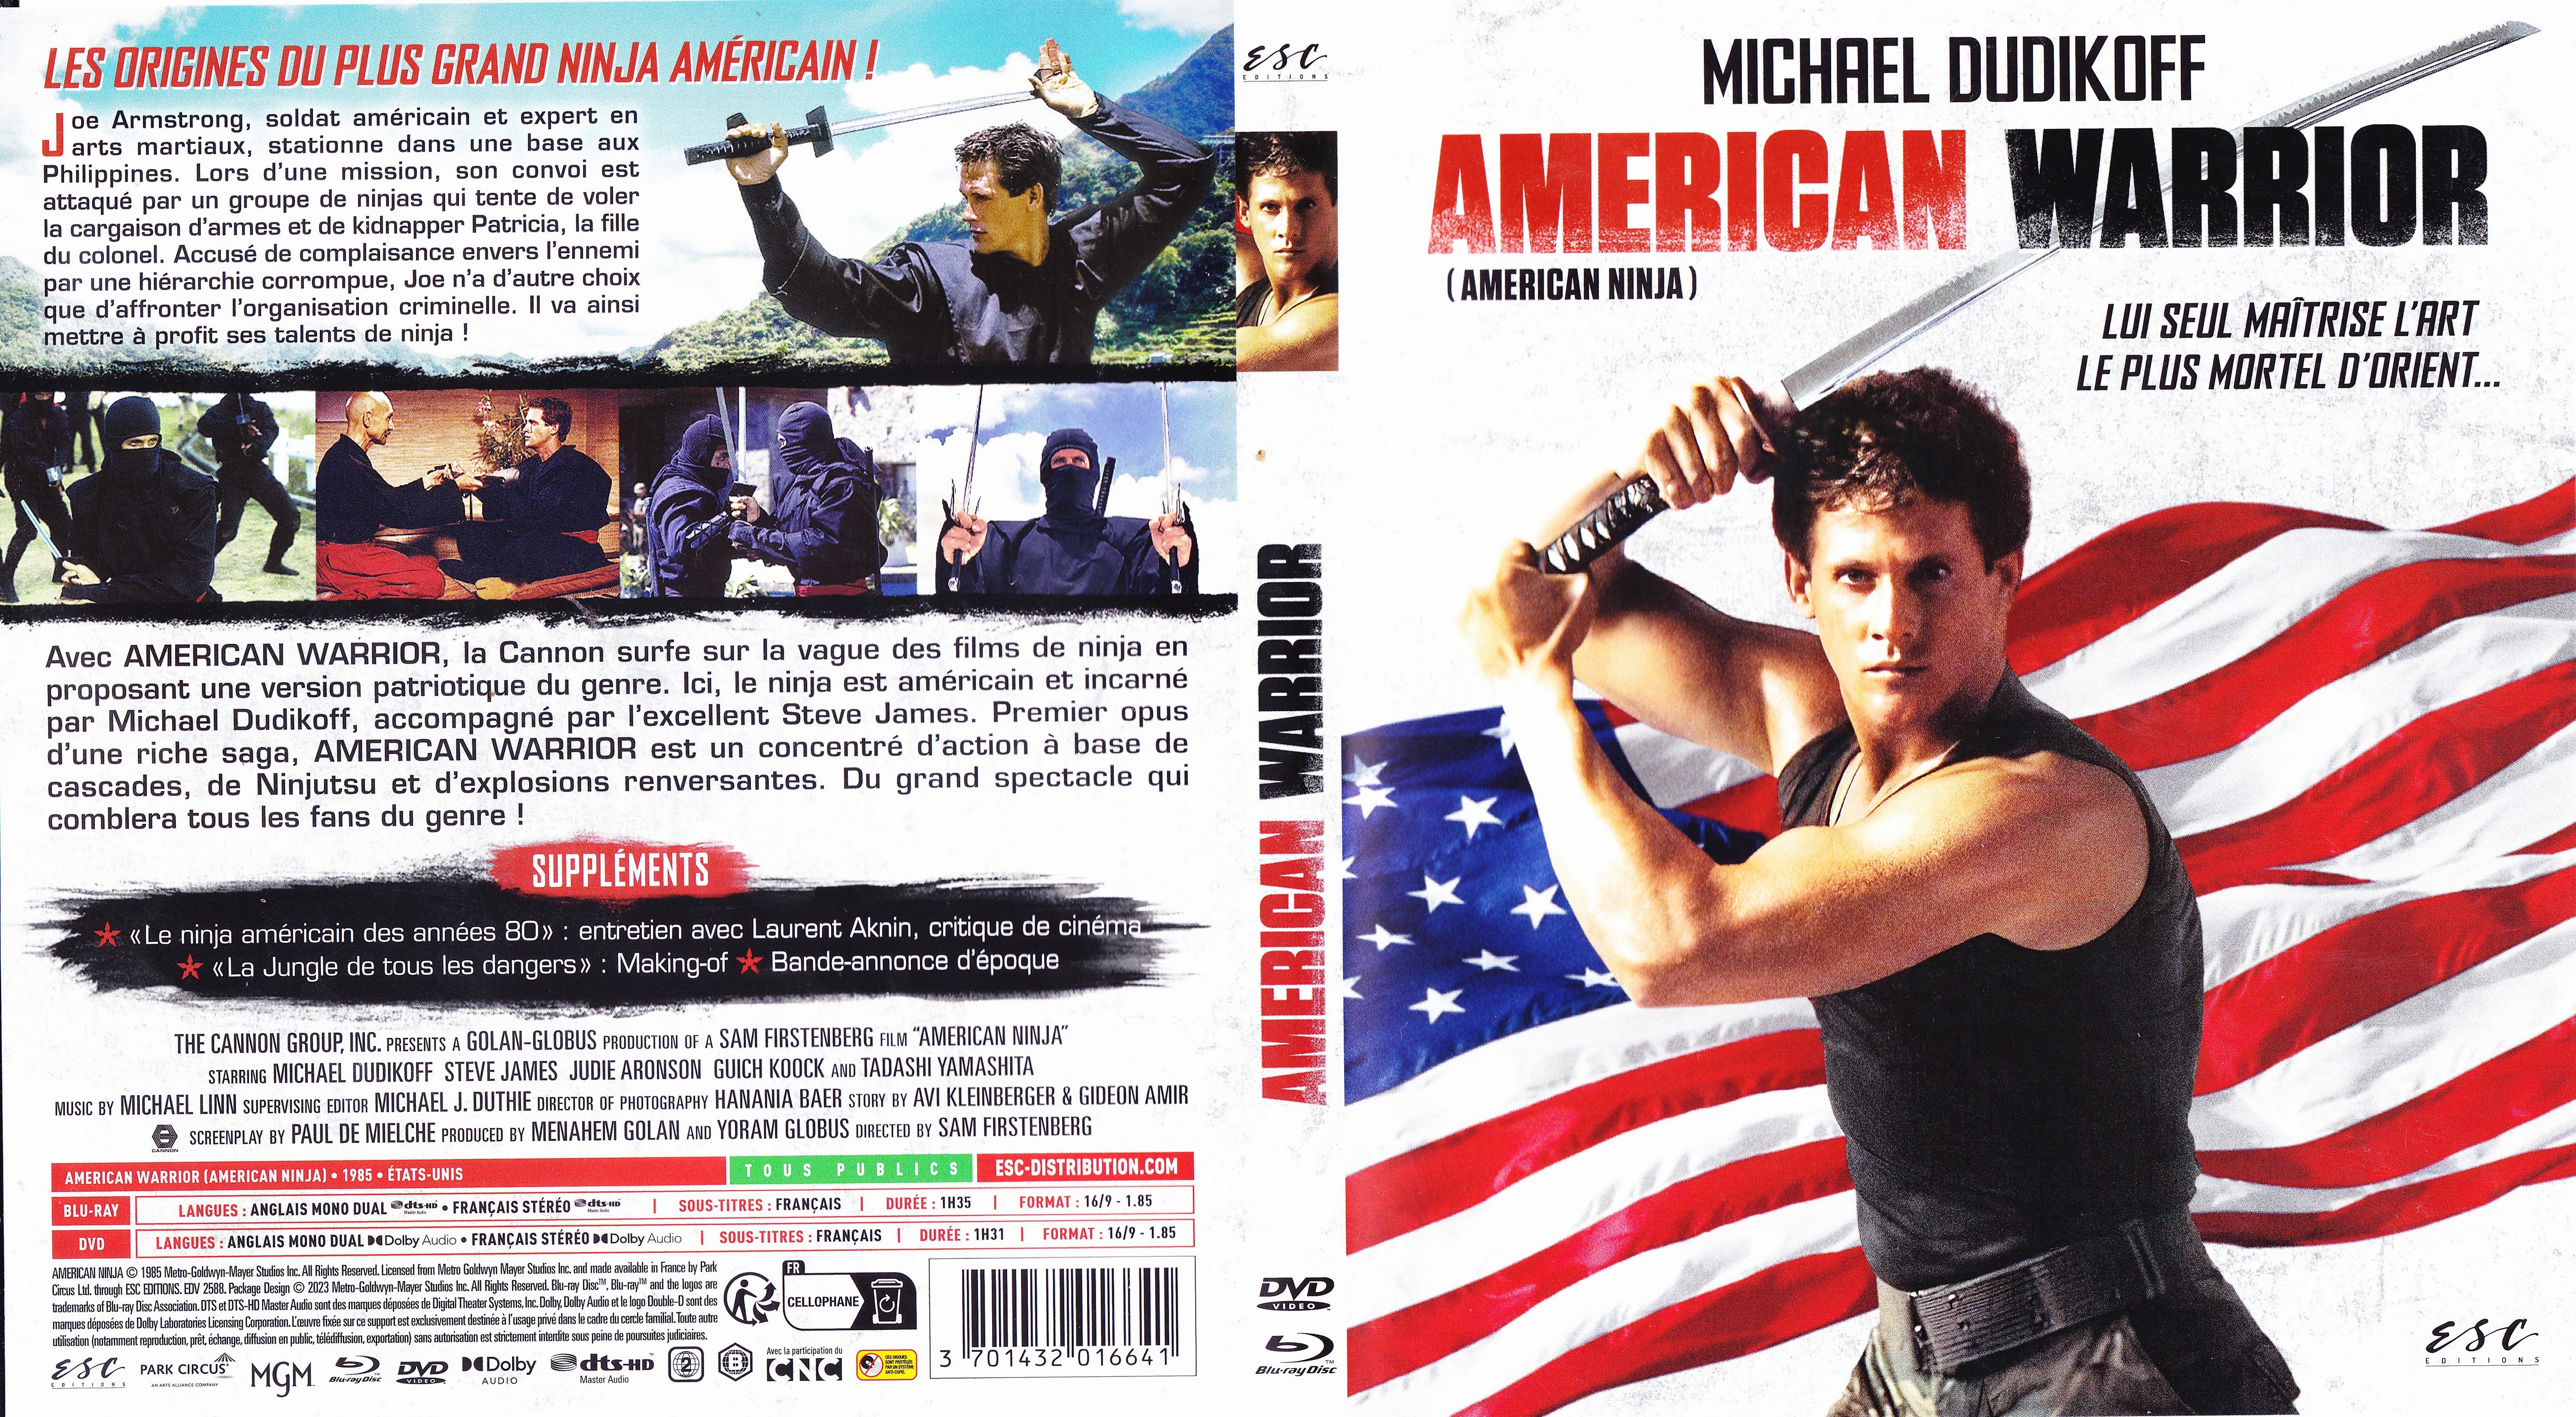 Jaquette DVD American Warrior (BLU-RAY)